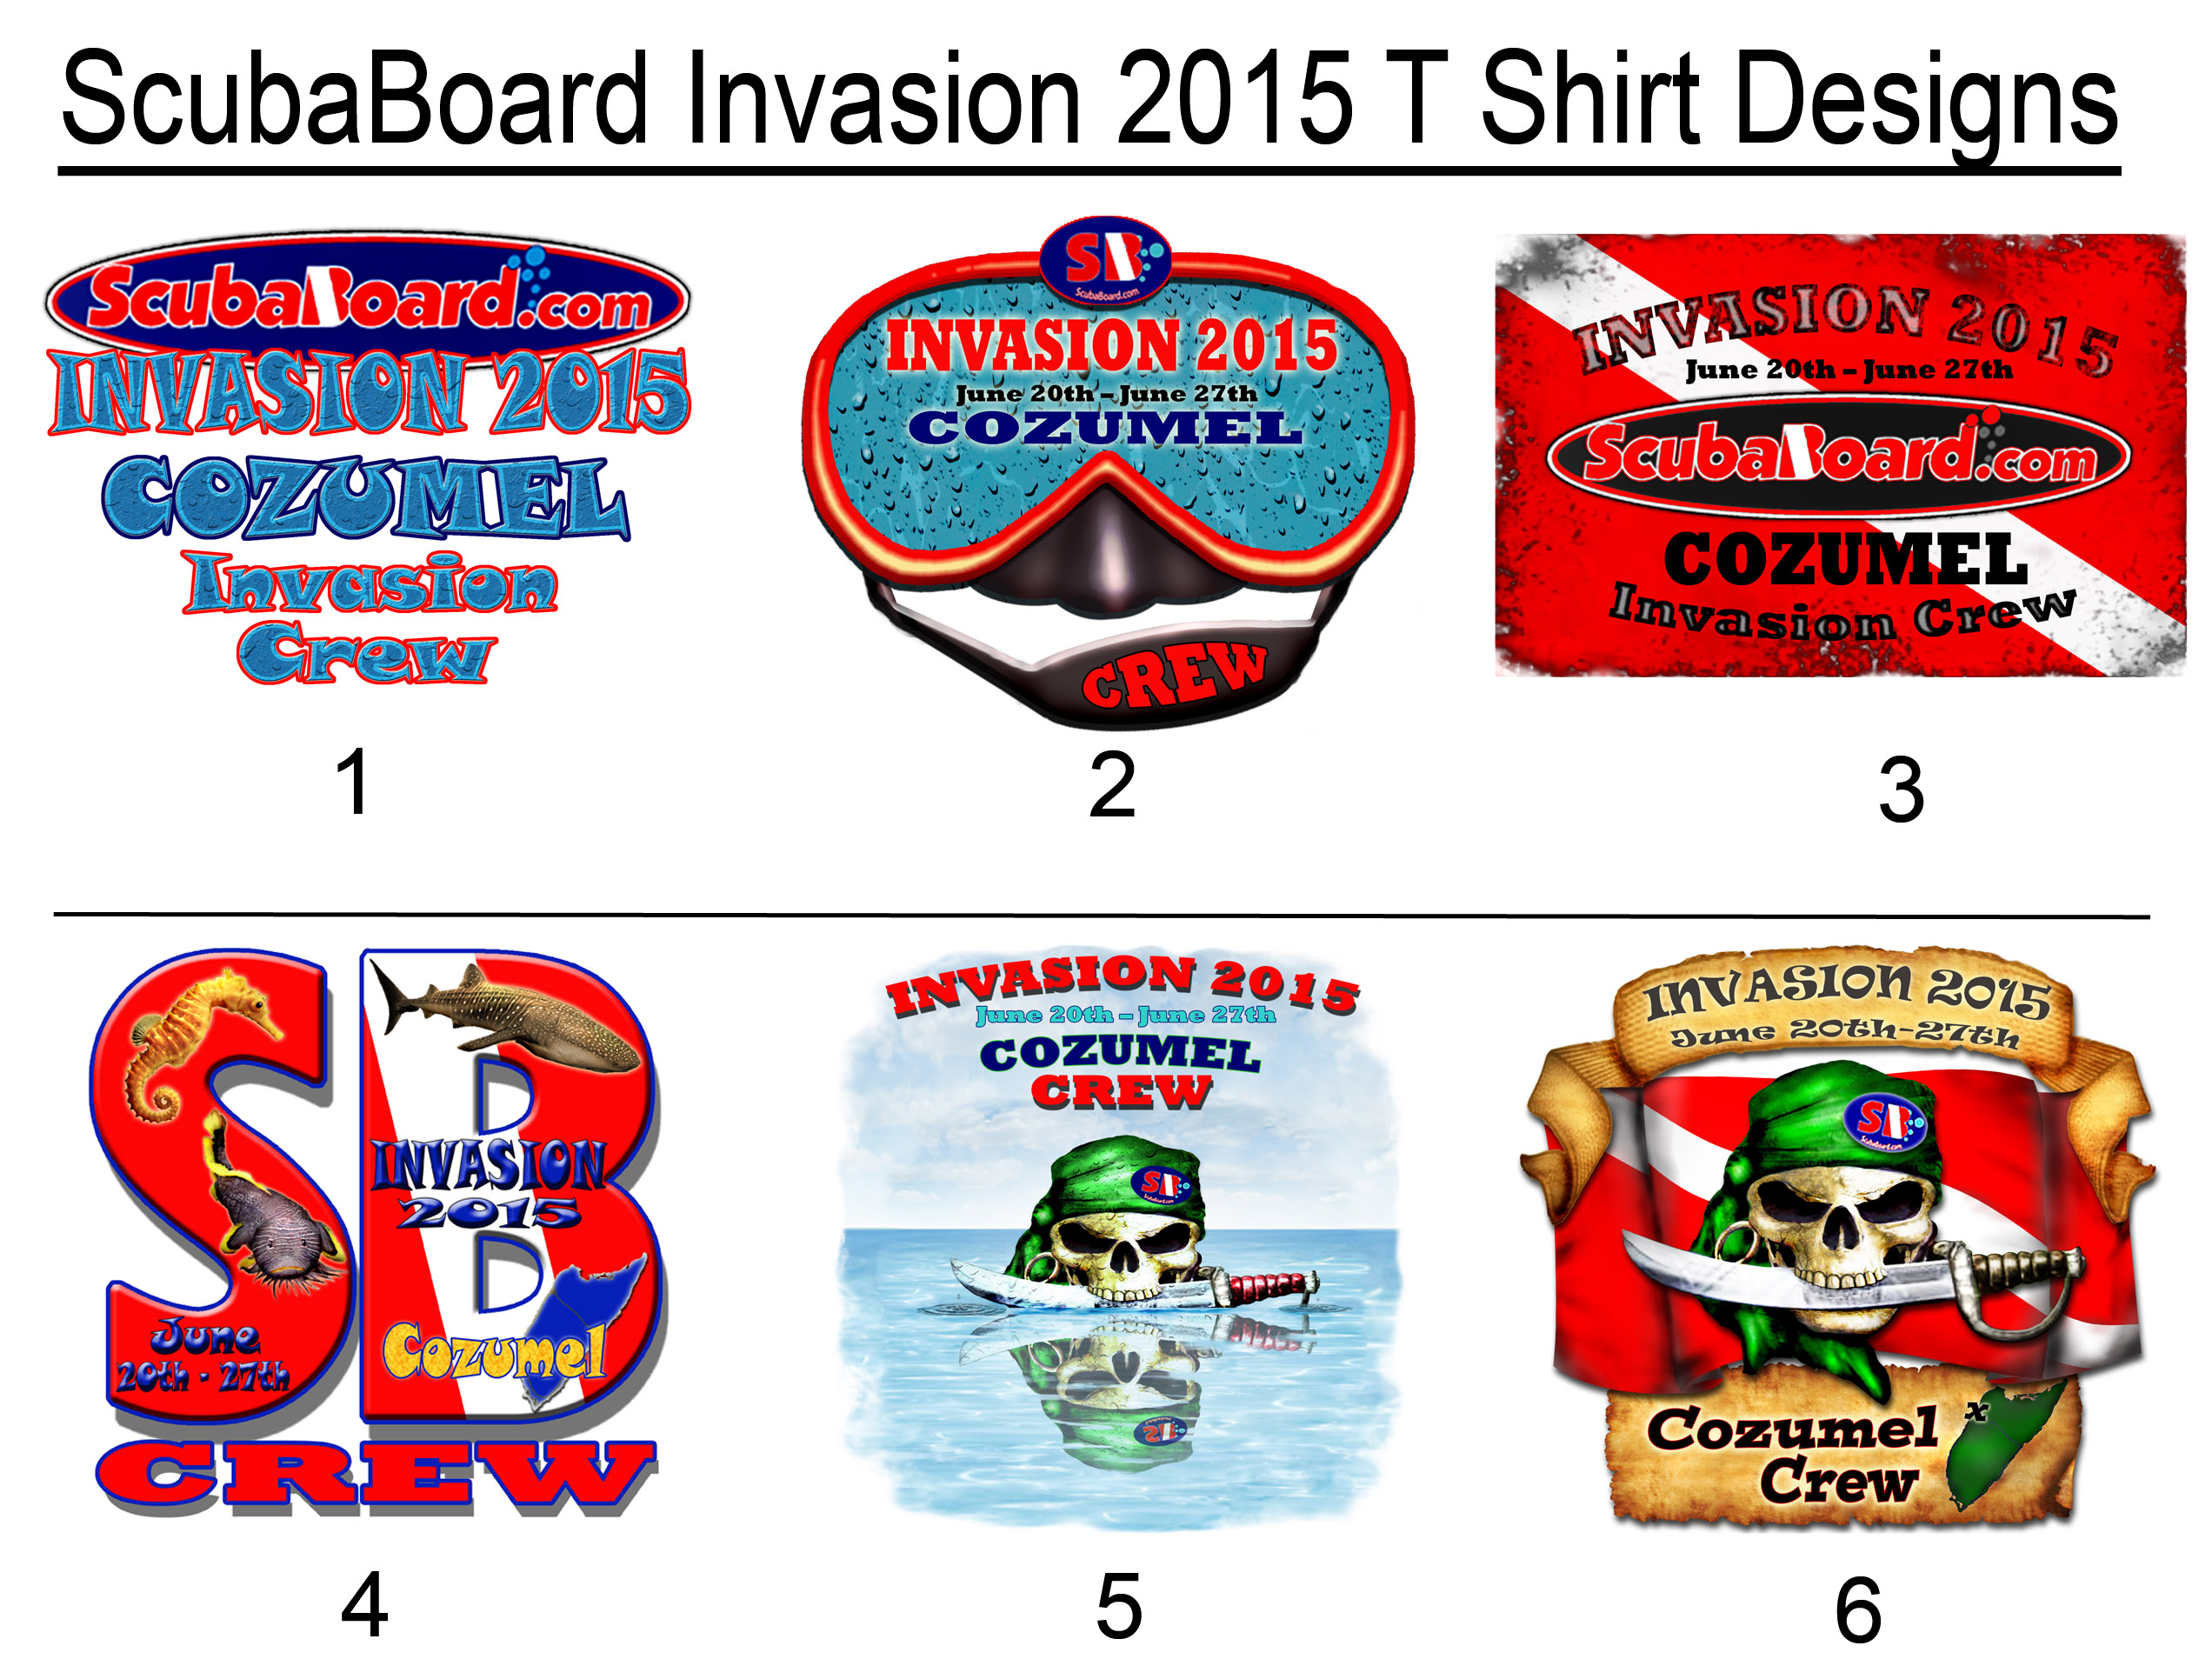 SB_Invasion_2015_T_Shirt_Designs_1-6